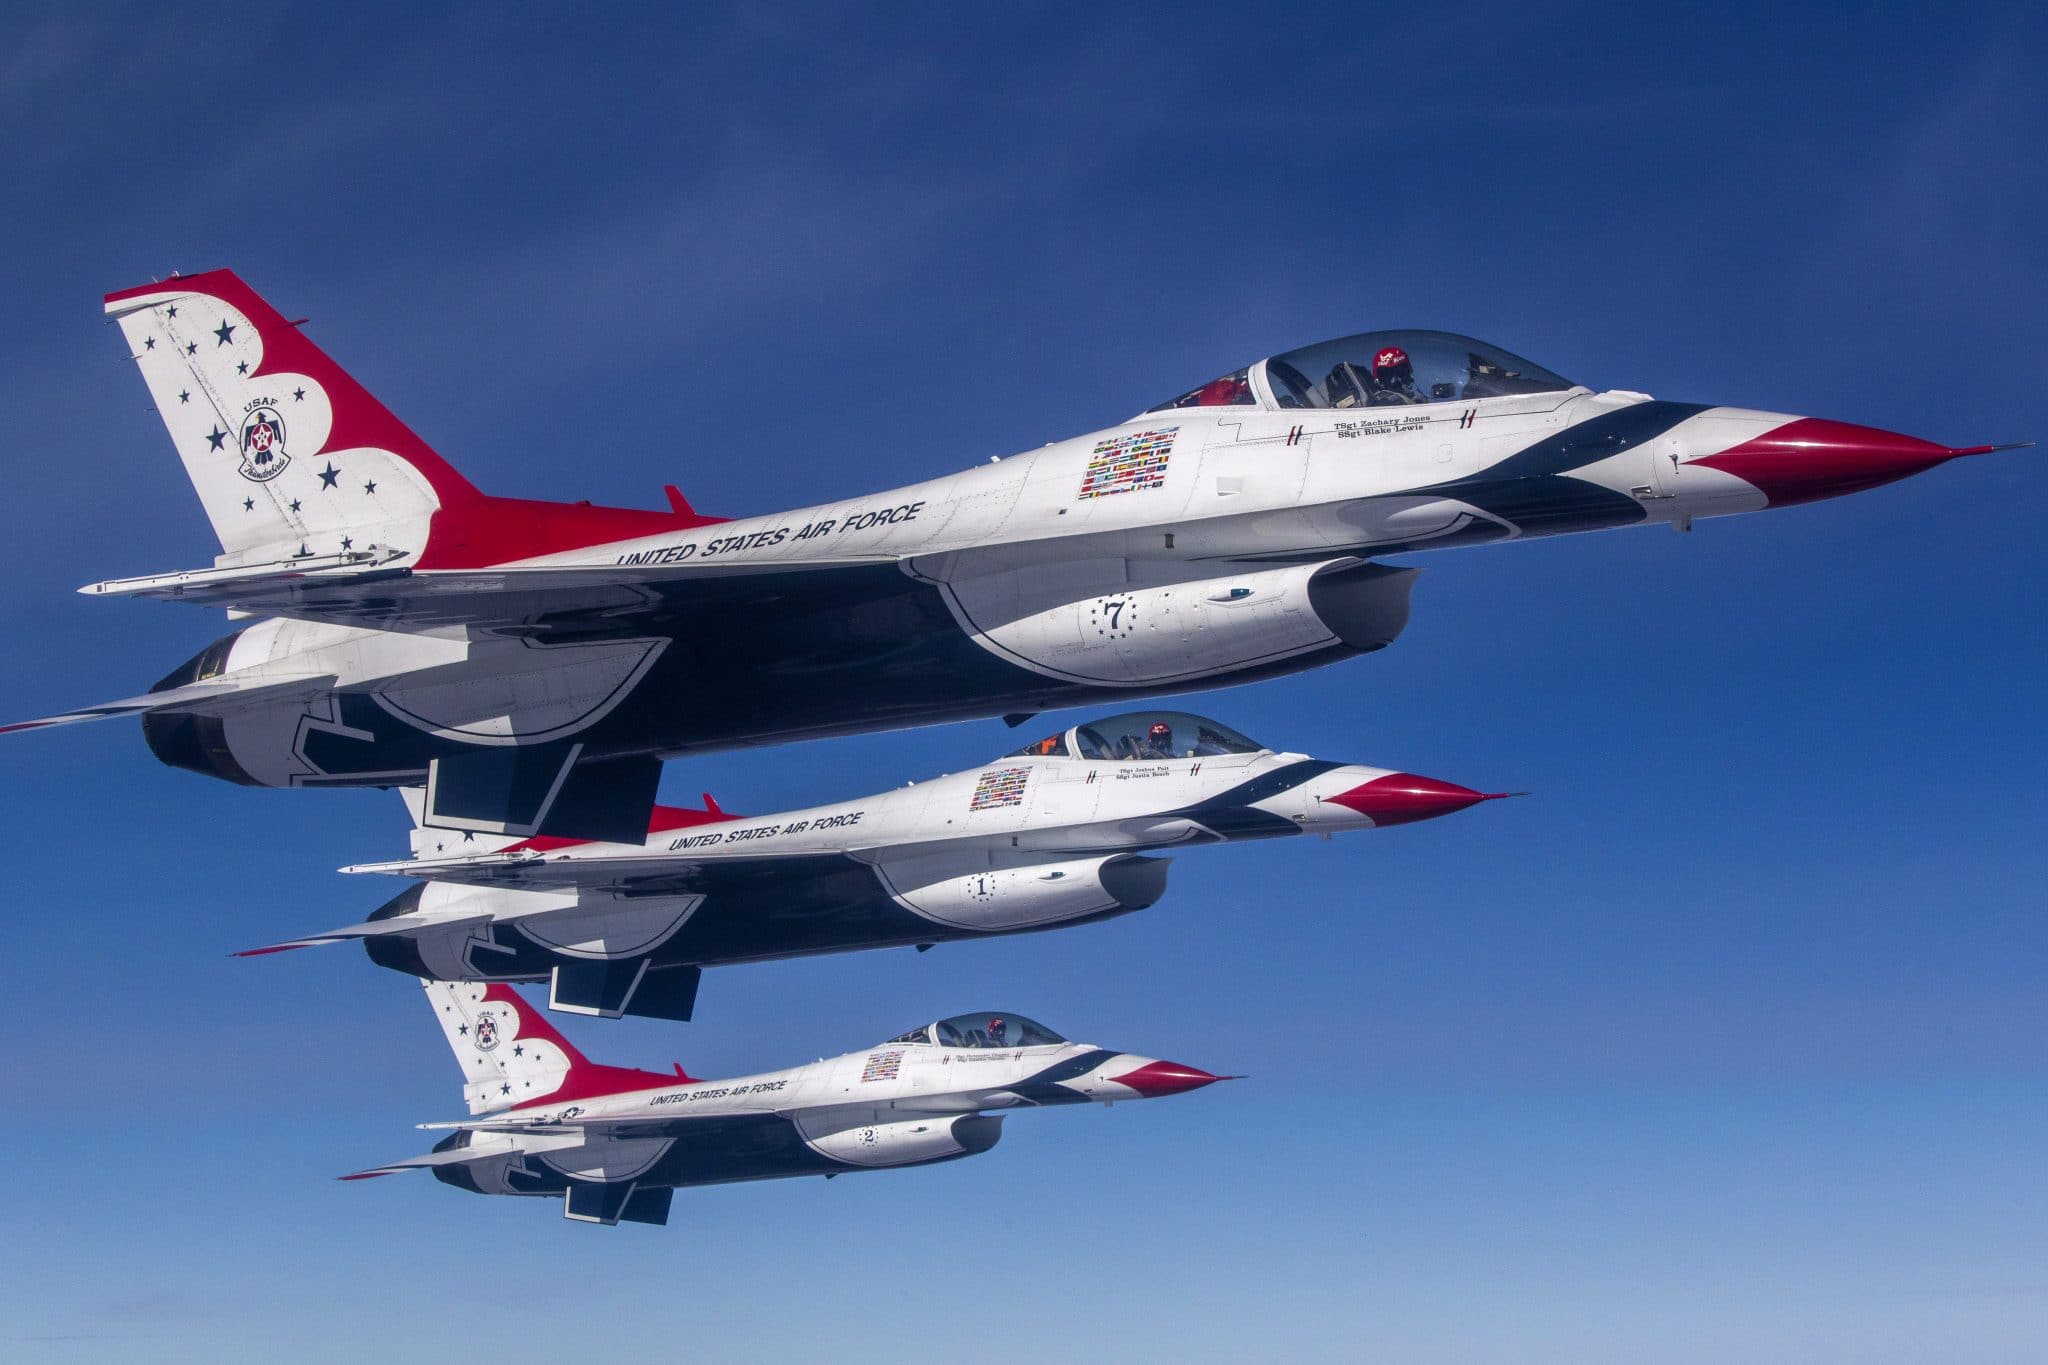 Thunderbird air force team manageengine mysql password